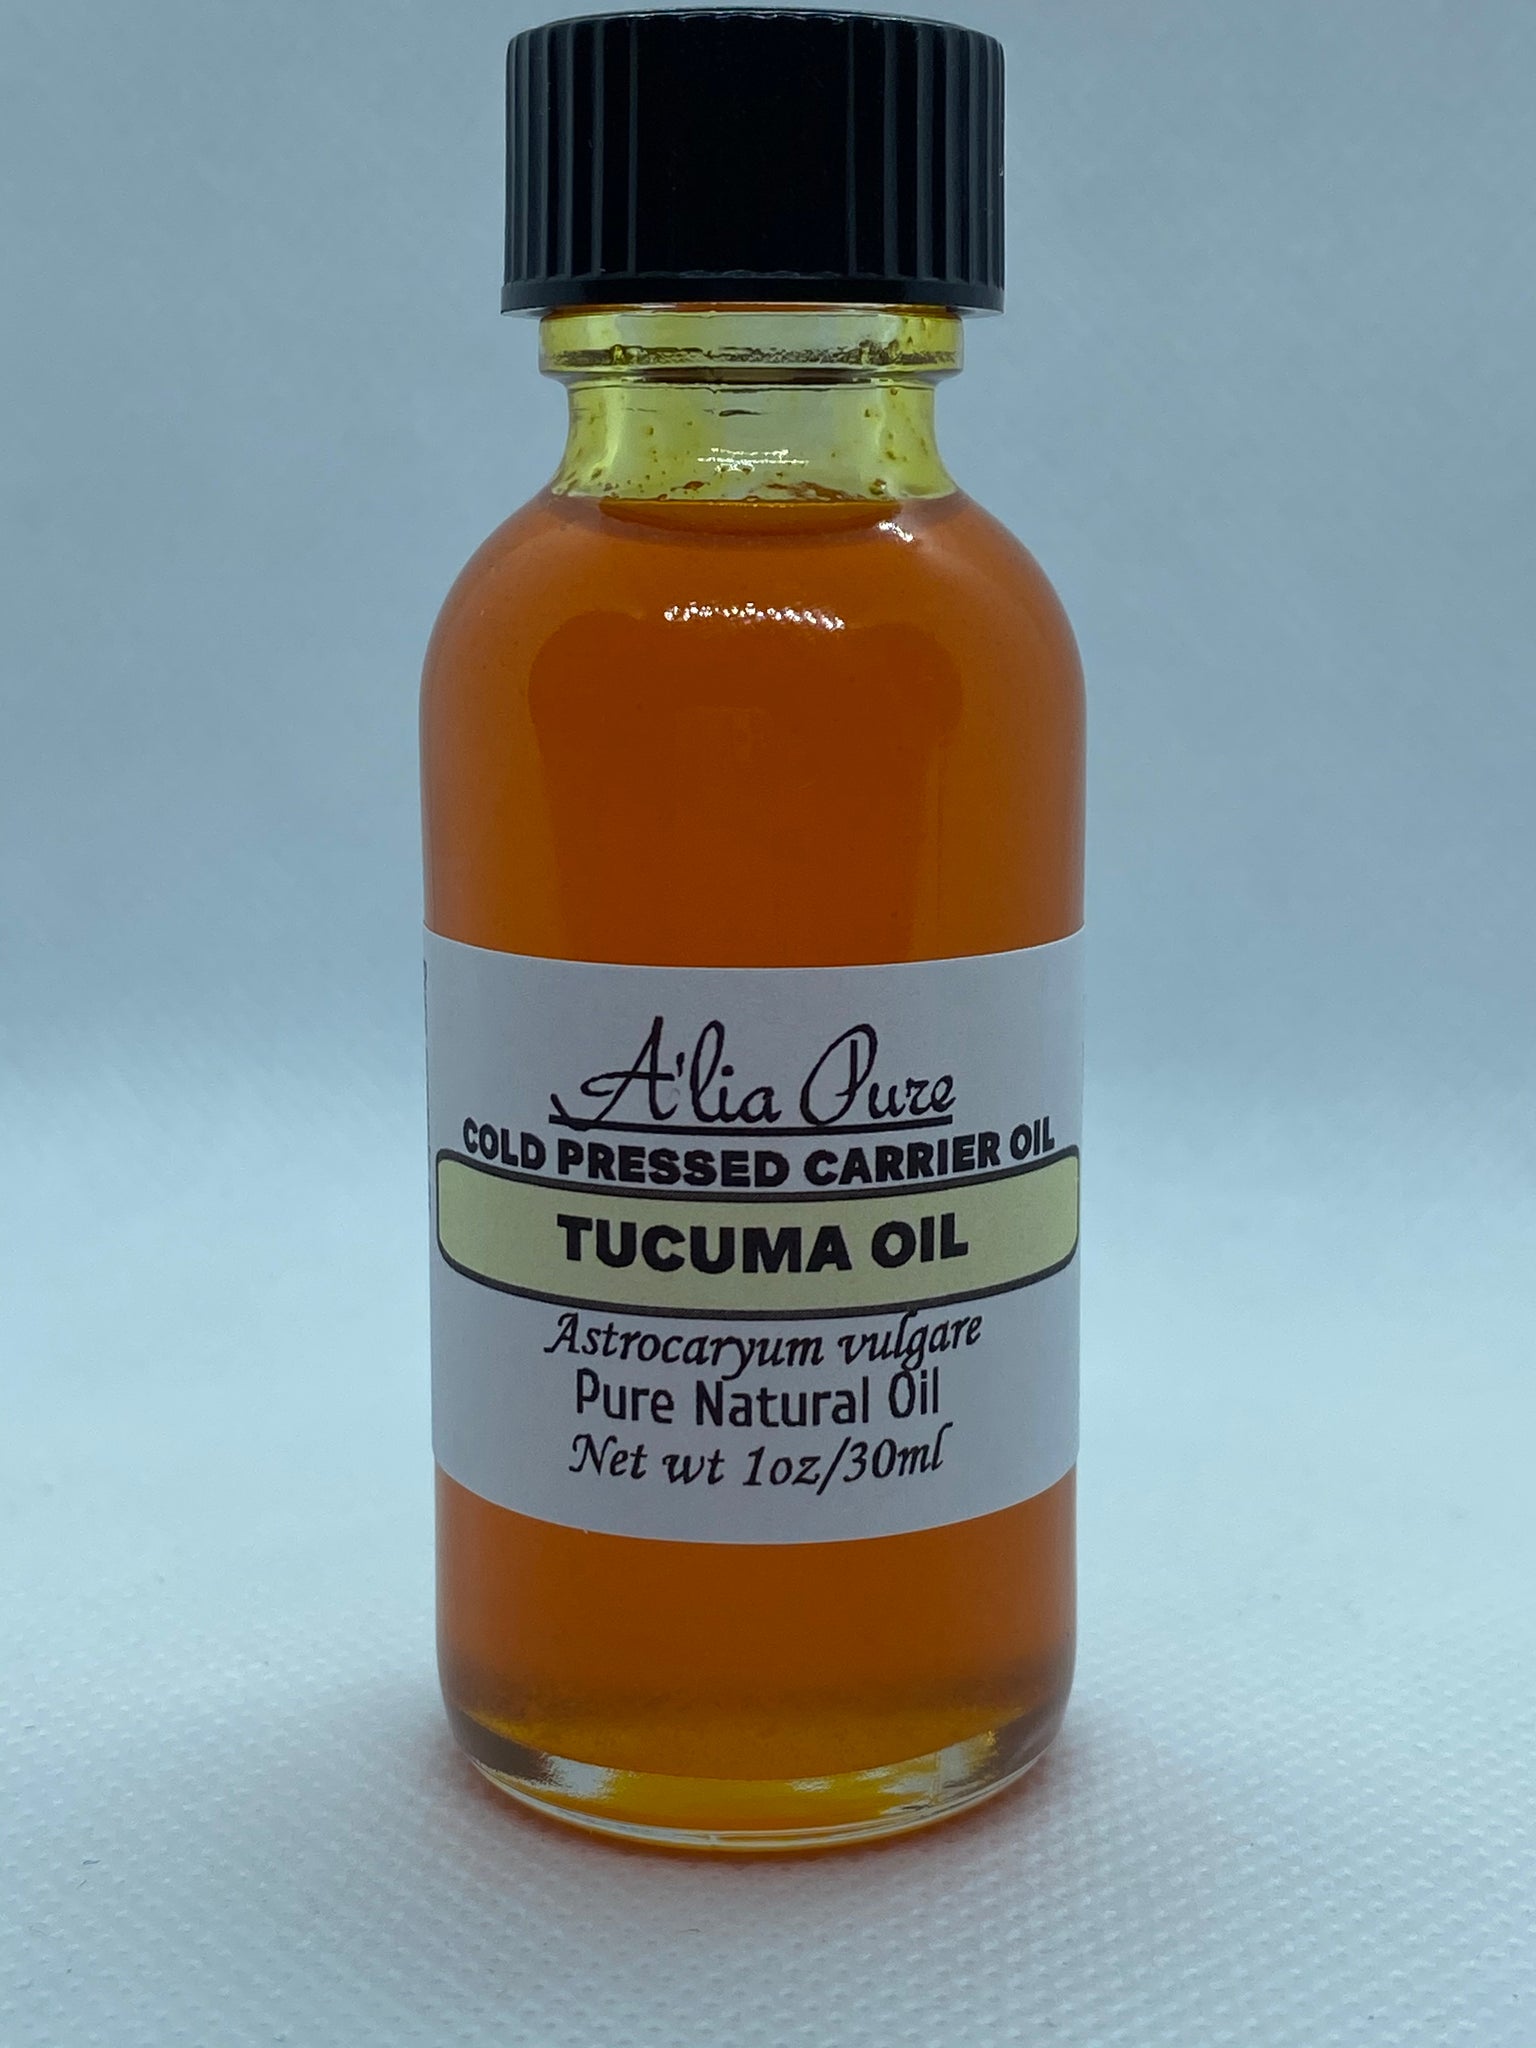 Tucuma Oil